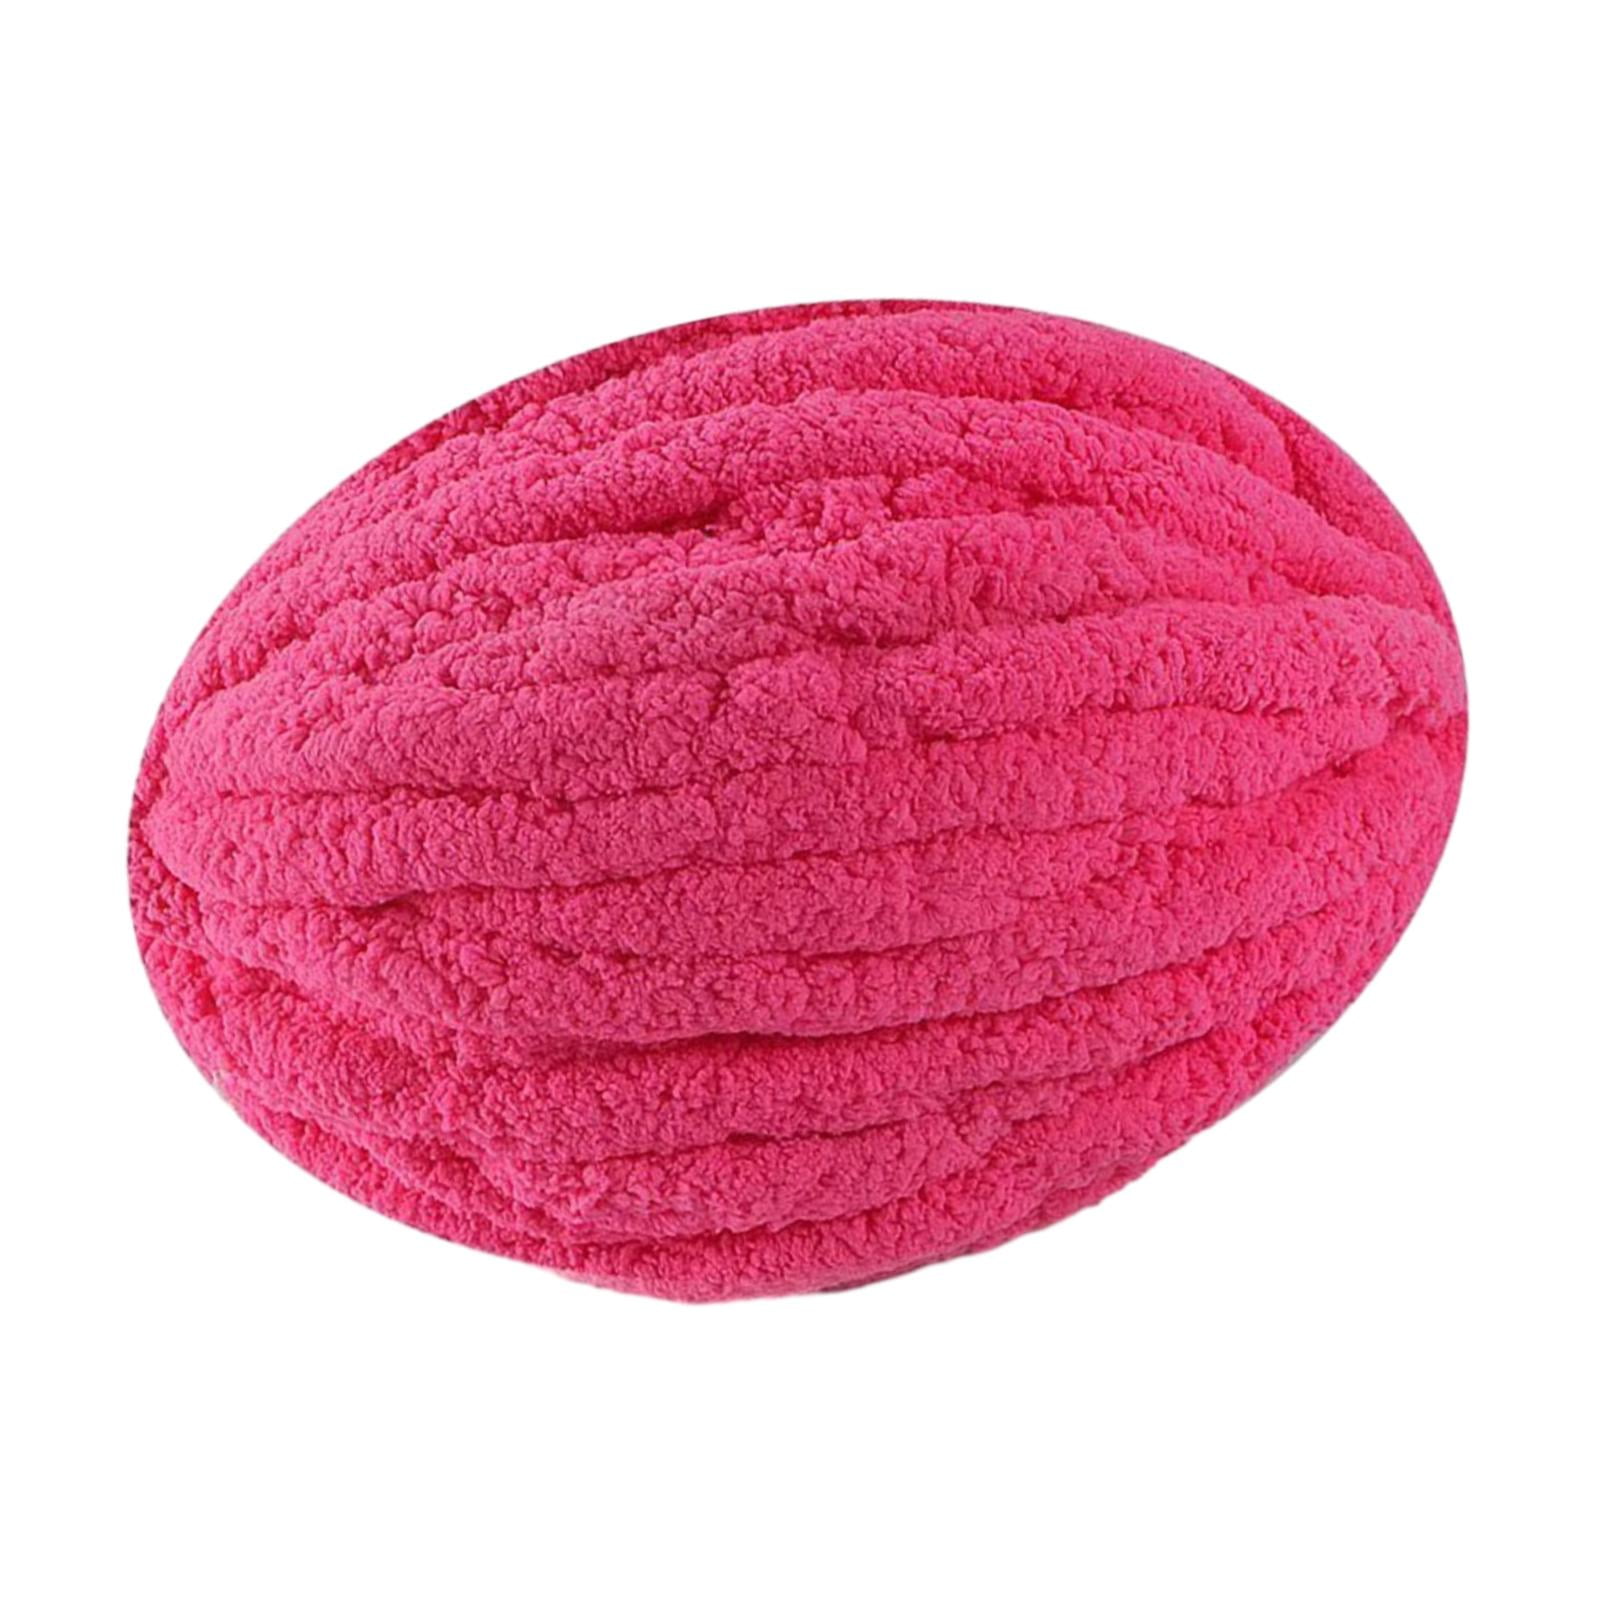 Thick Chunky Yarn Chunky Wool Yarn Bulky Yarn for Crocheting Arm Knitting Yarn Weight Yarn Knit Yarn for Knitted Blanket Mat Weaving Sweater Rose Pink